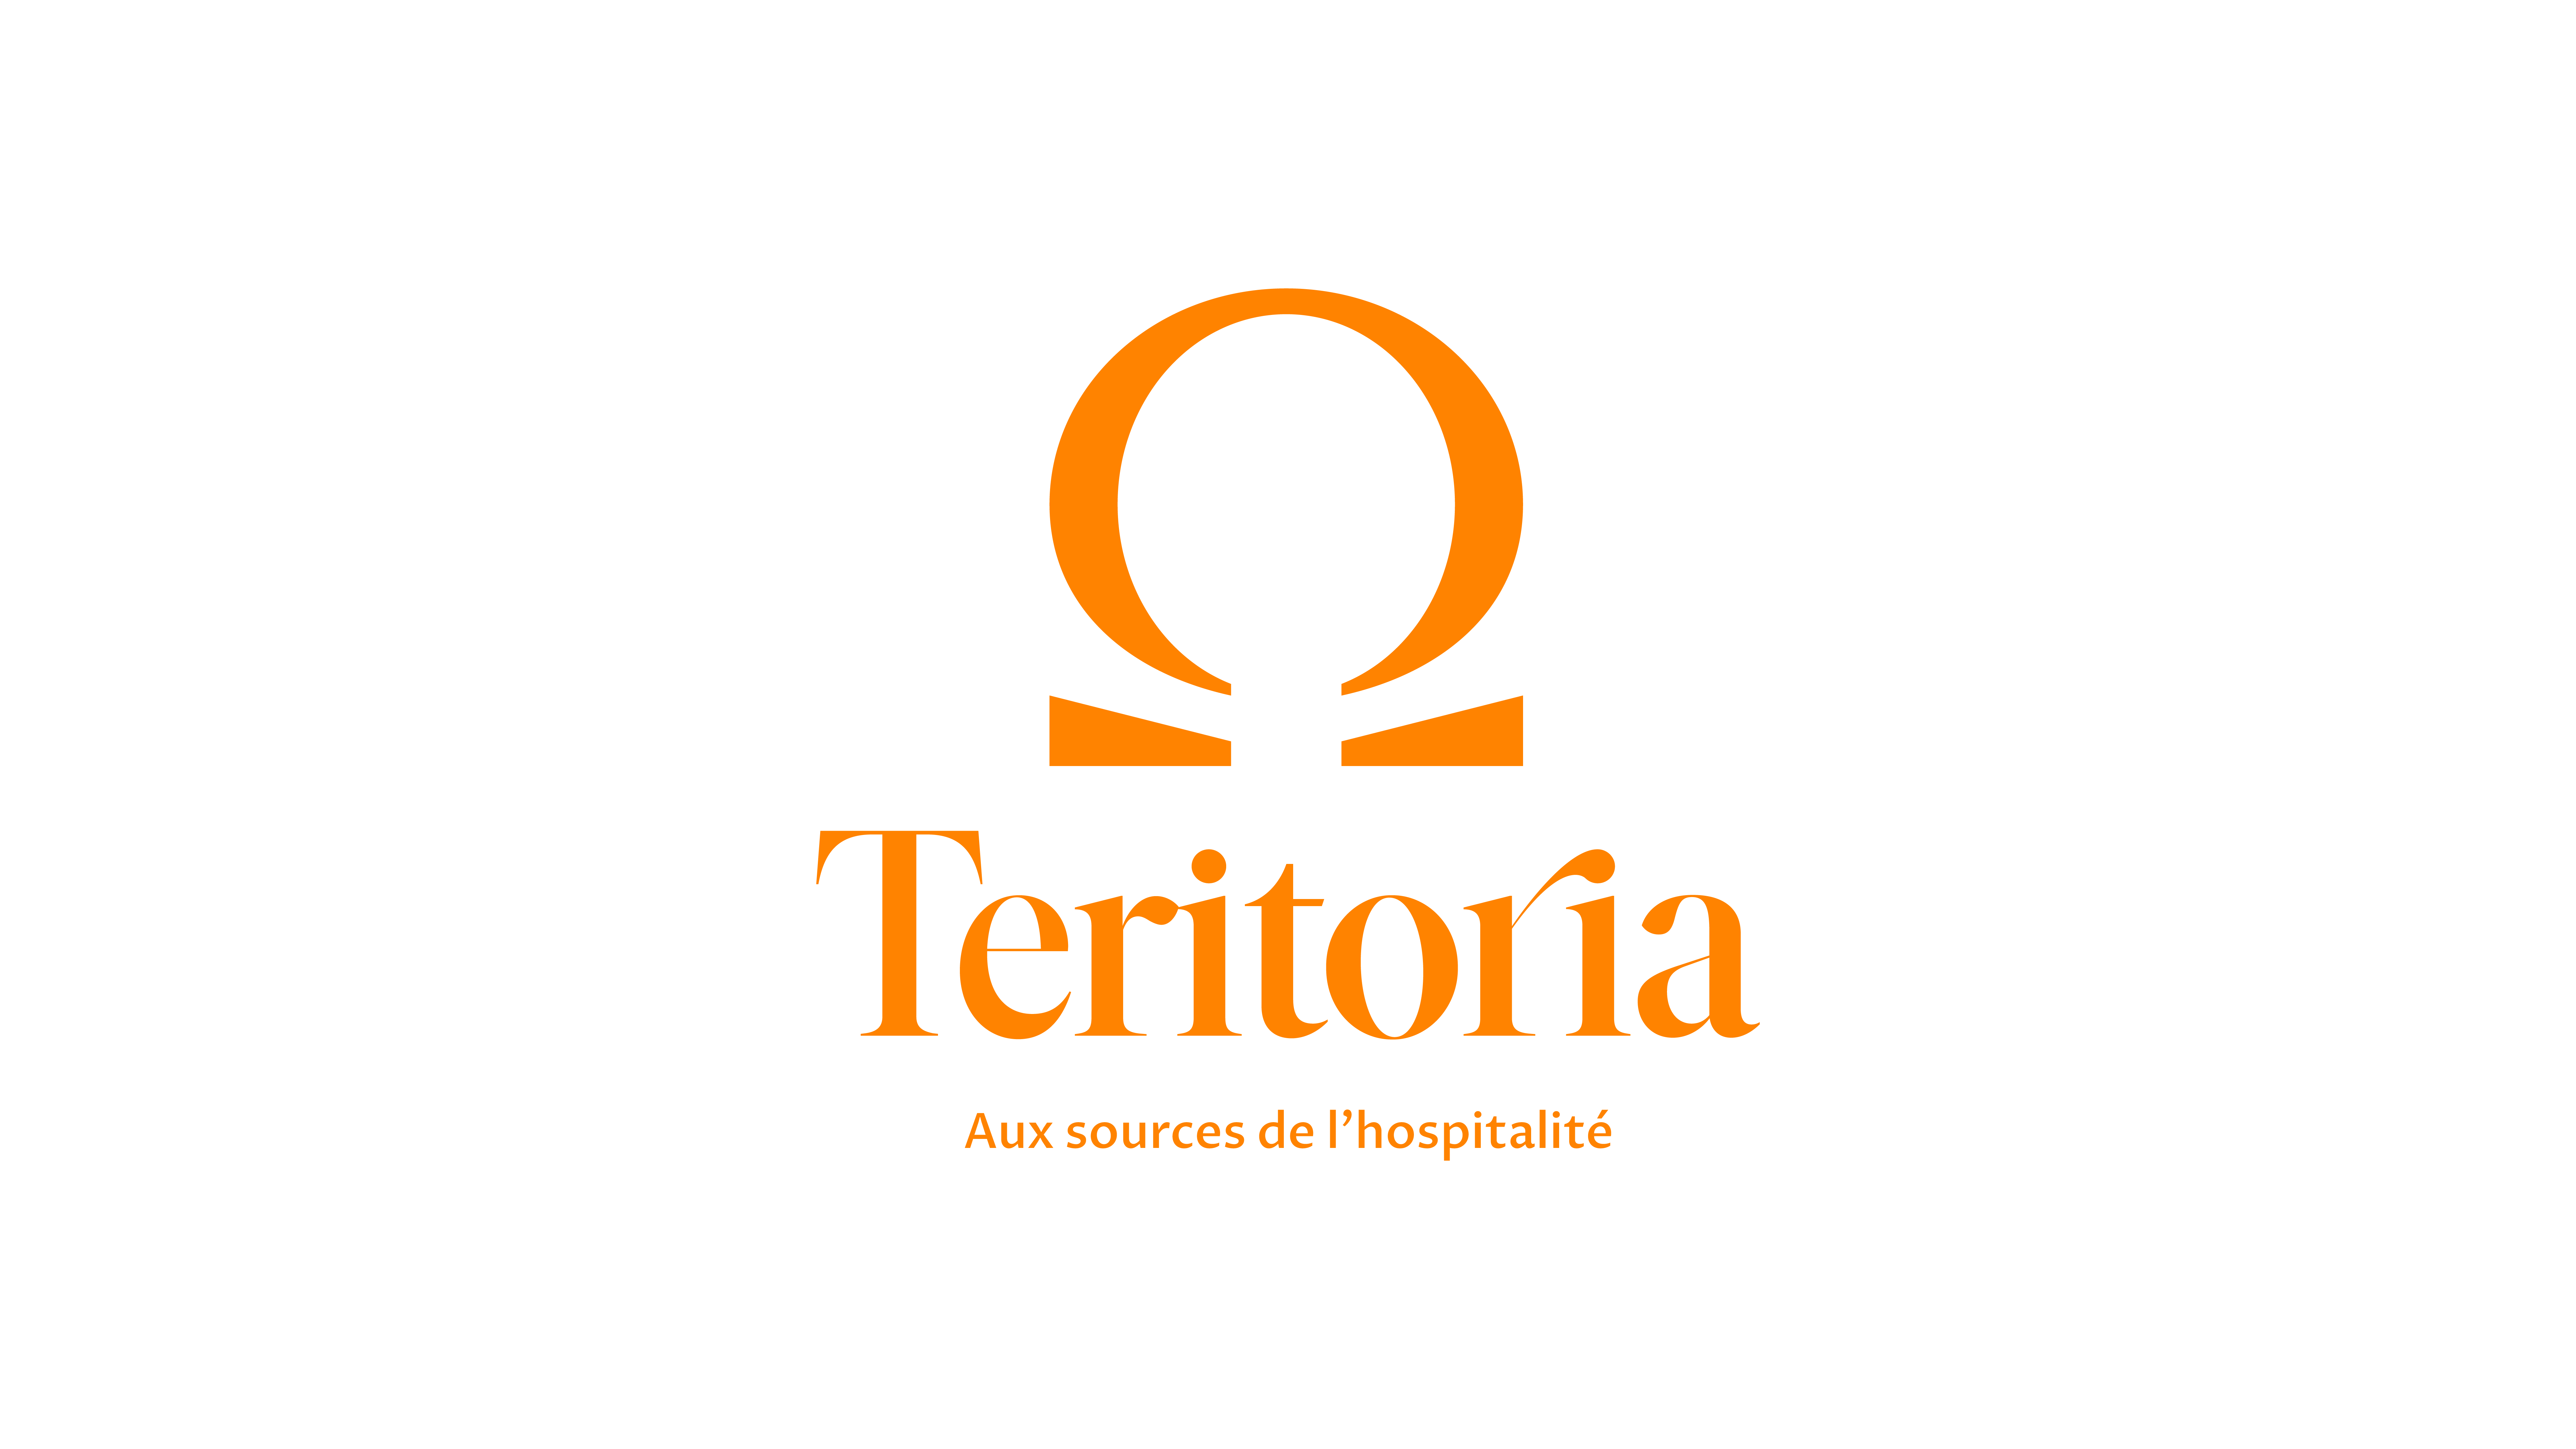 teritoria logo